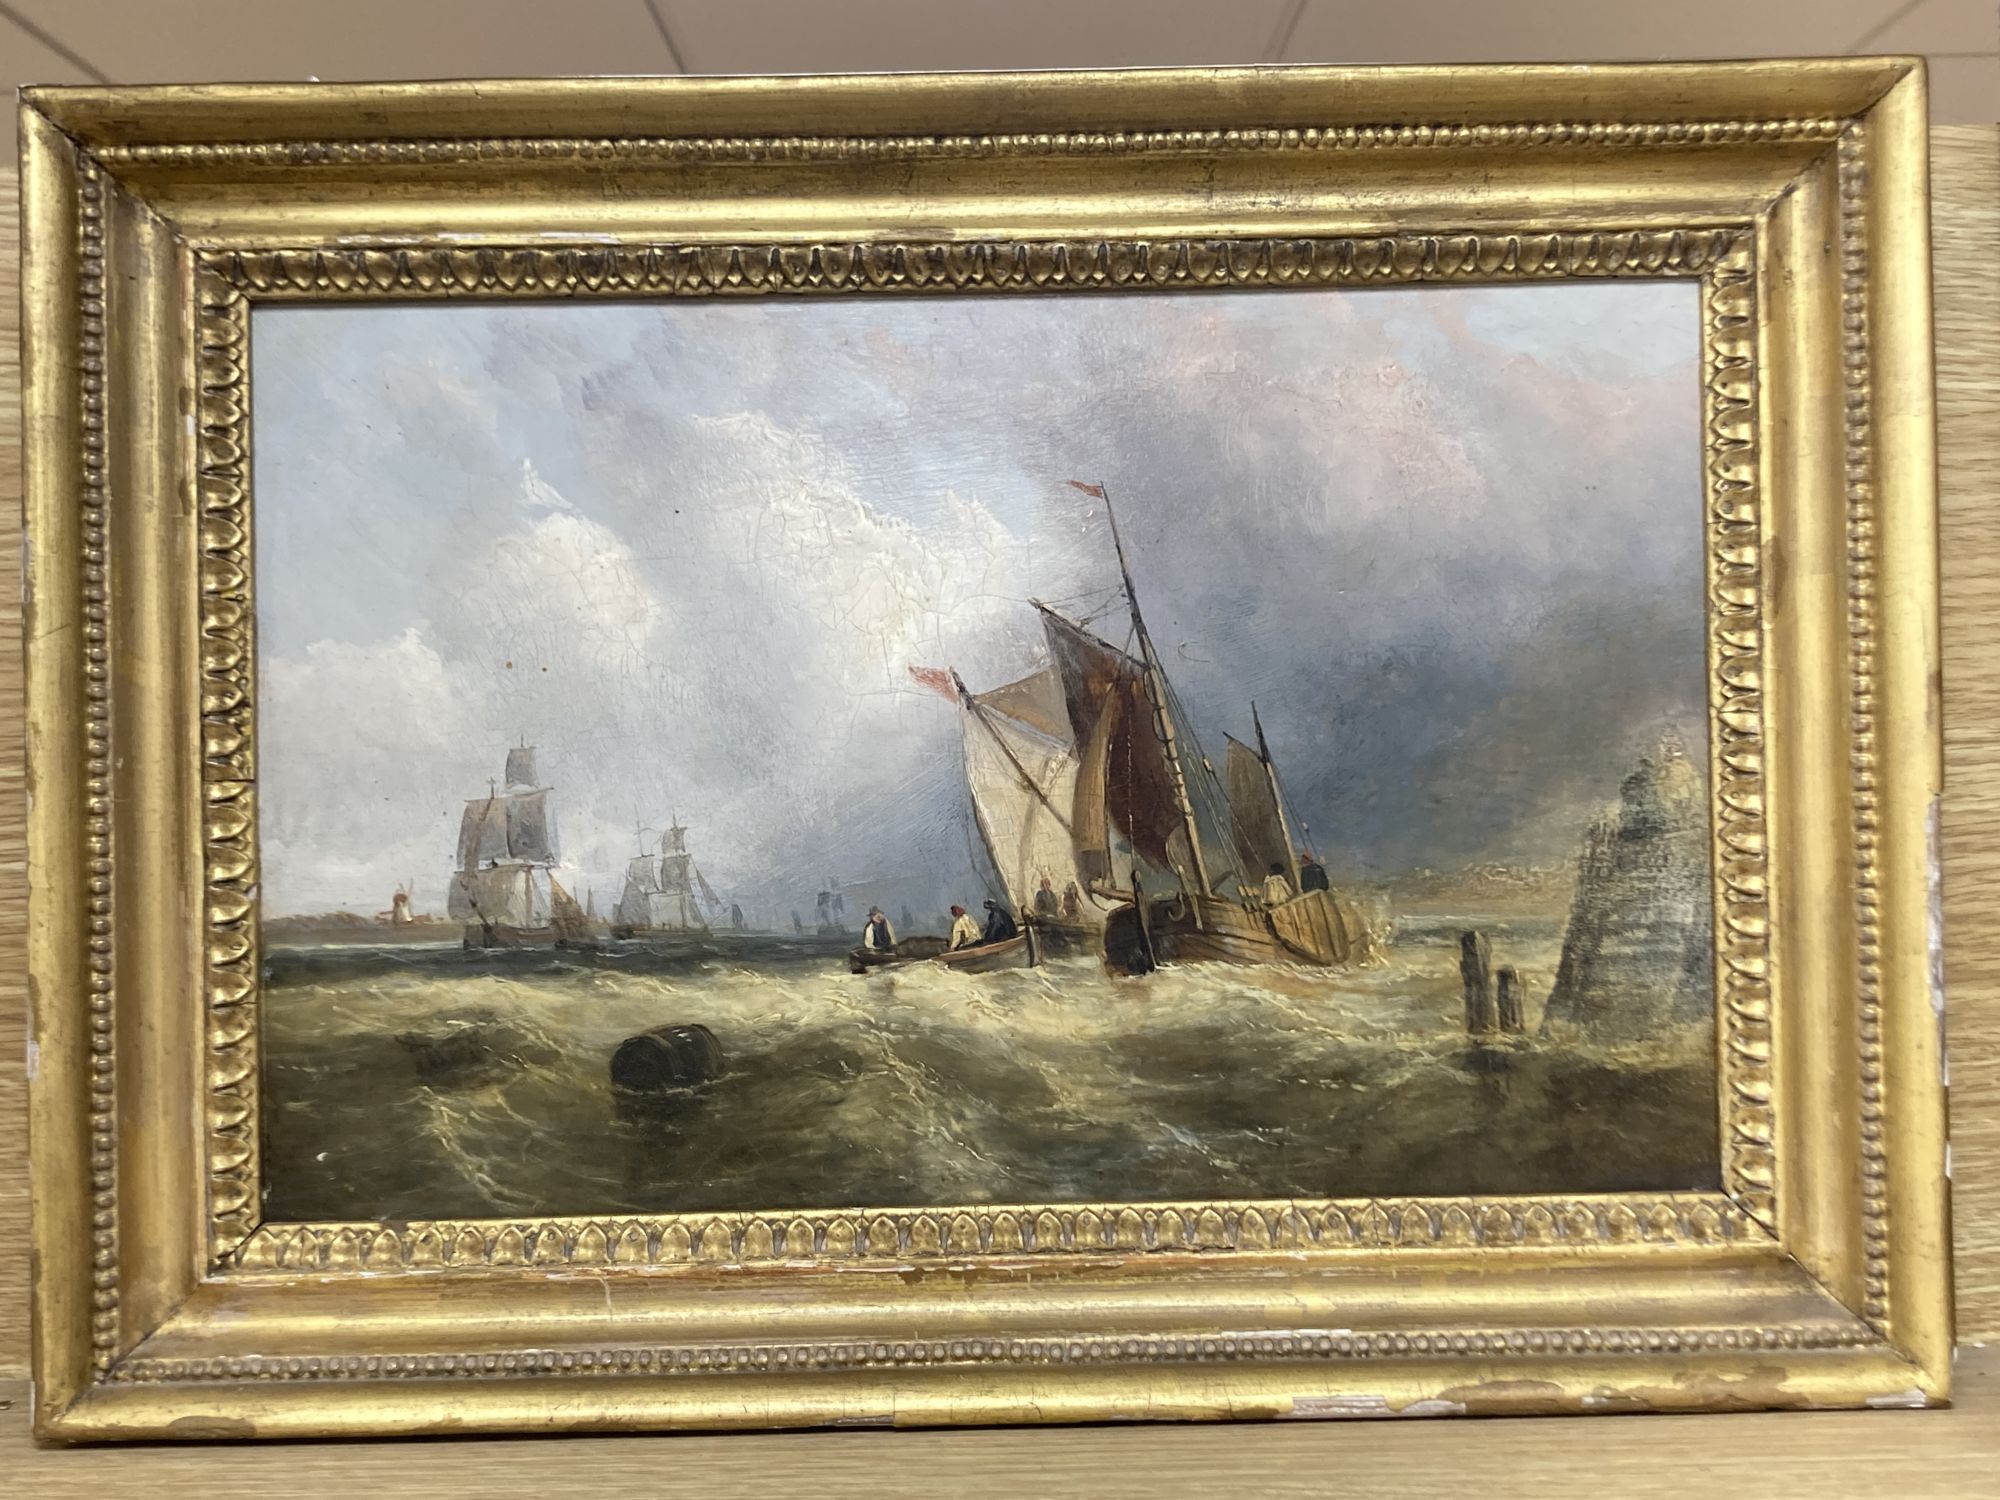 19th century English School, oil on panel, Shipping off the coast, 24 x 38cm